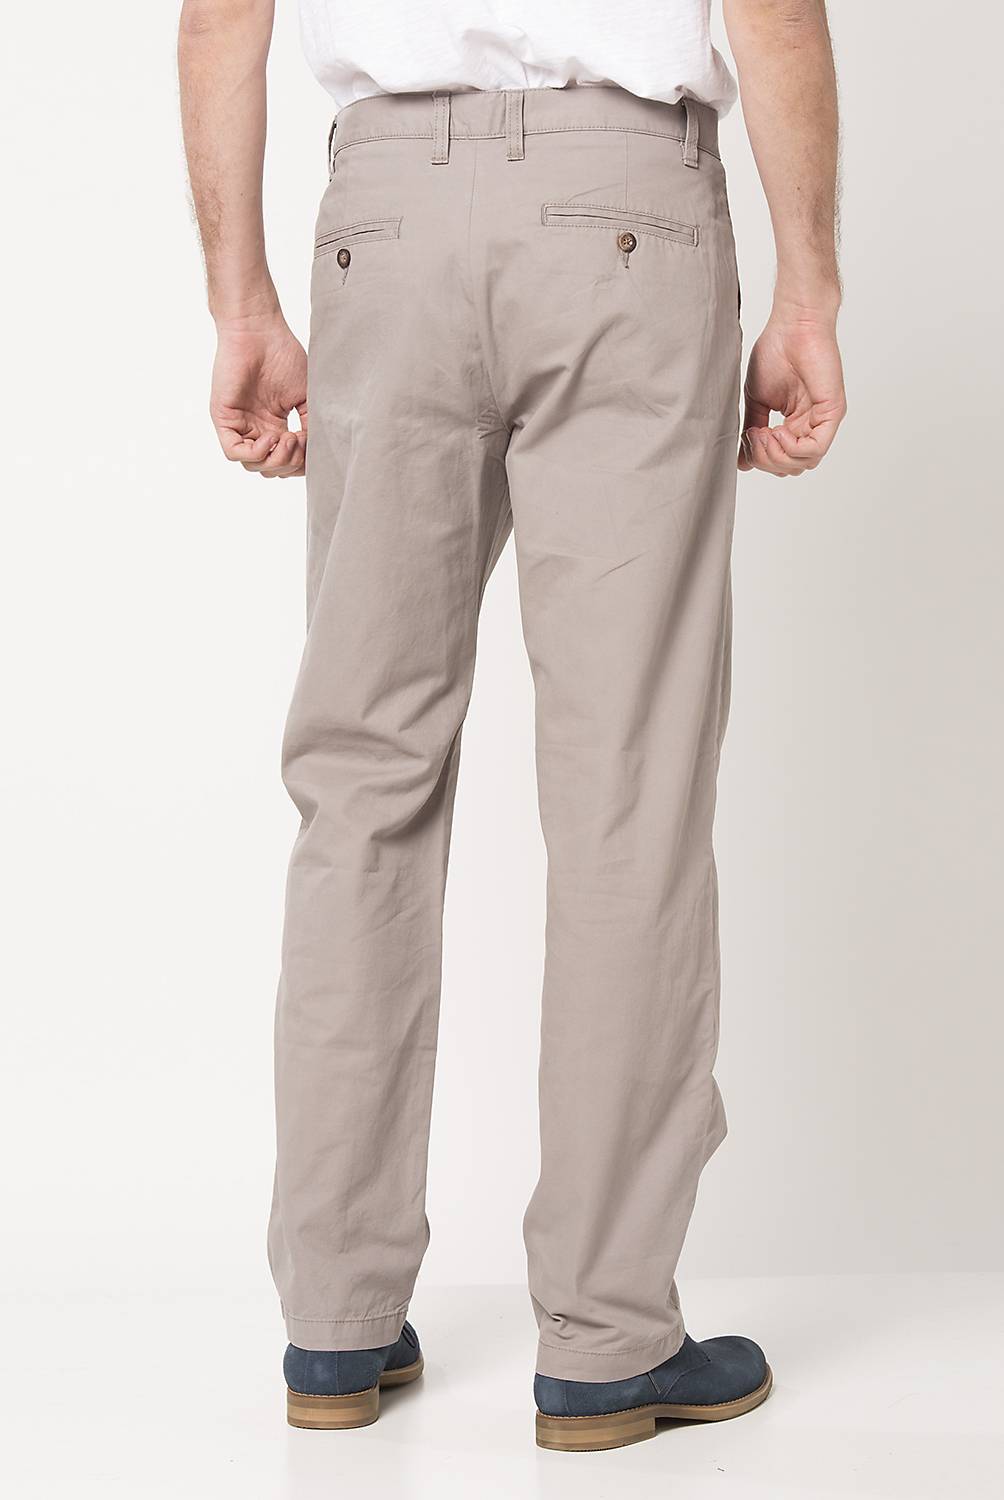 NEWPORT - Pantalón Grey